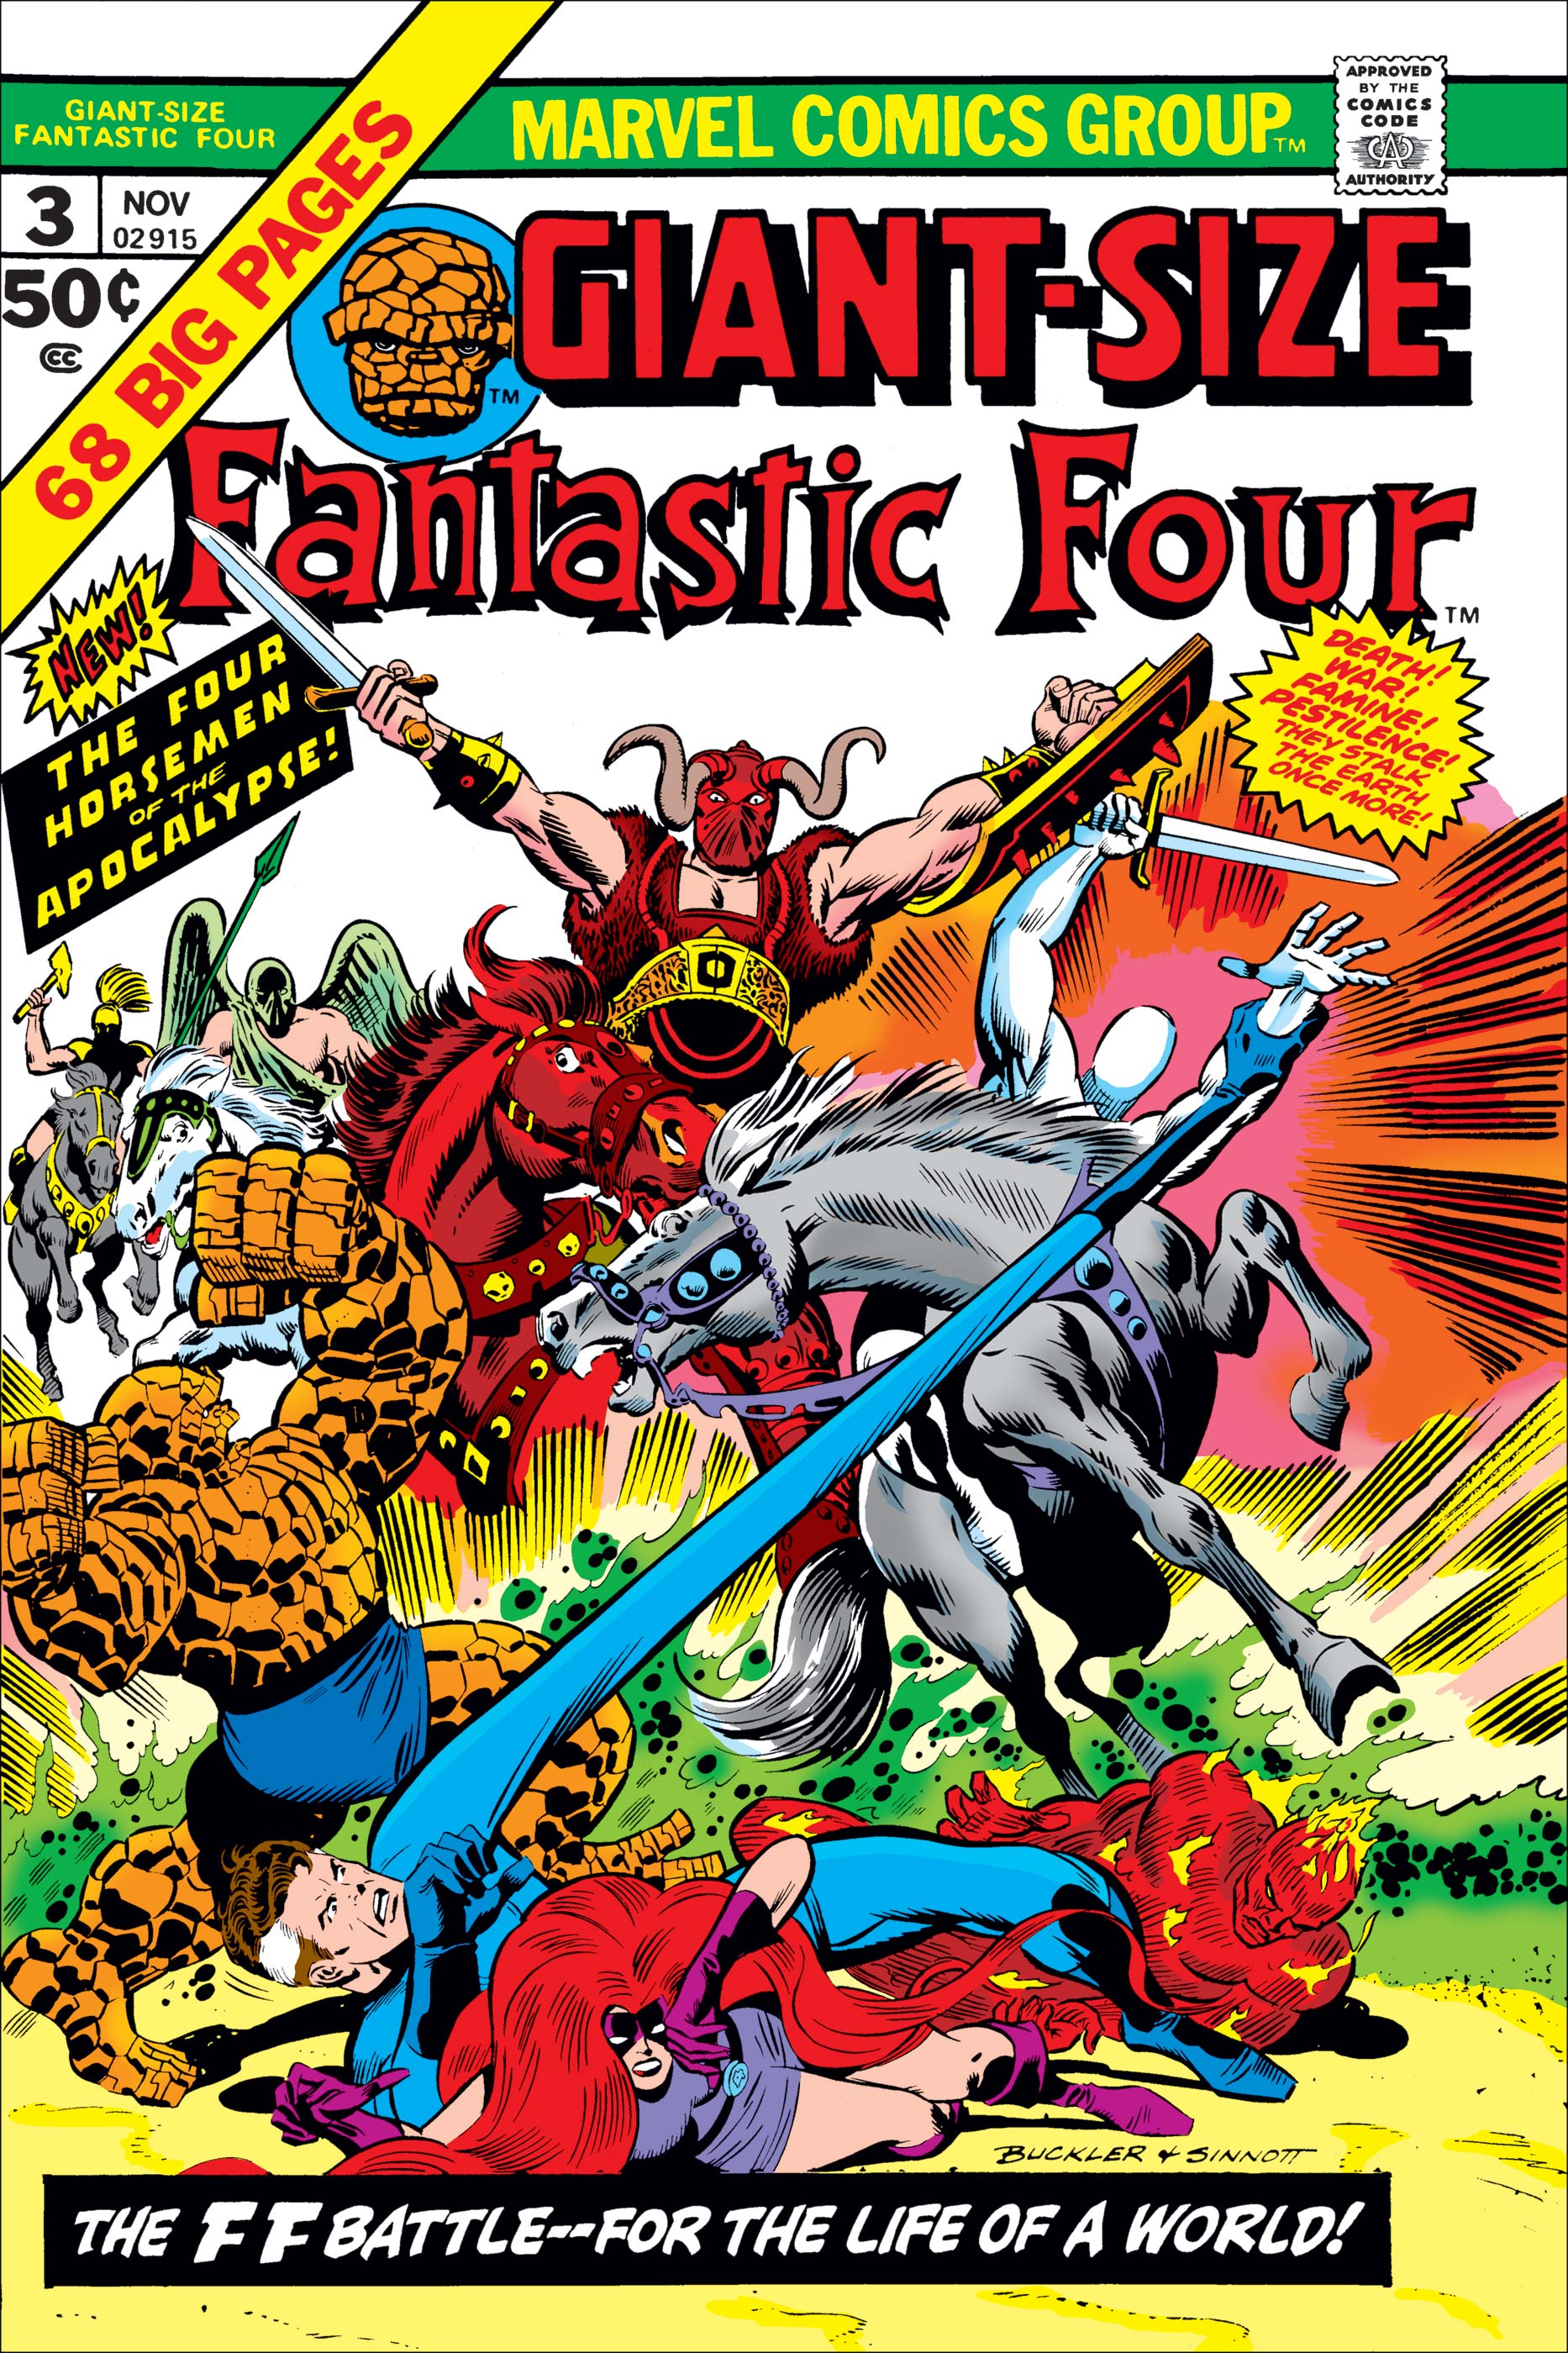 Giant-Size Fantastic Four (1974) #3